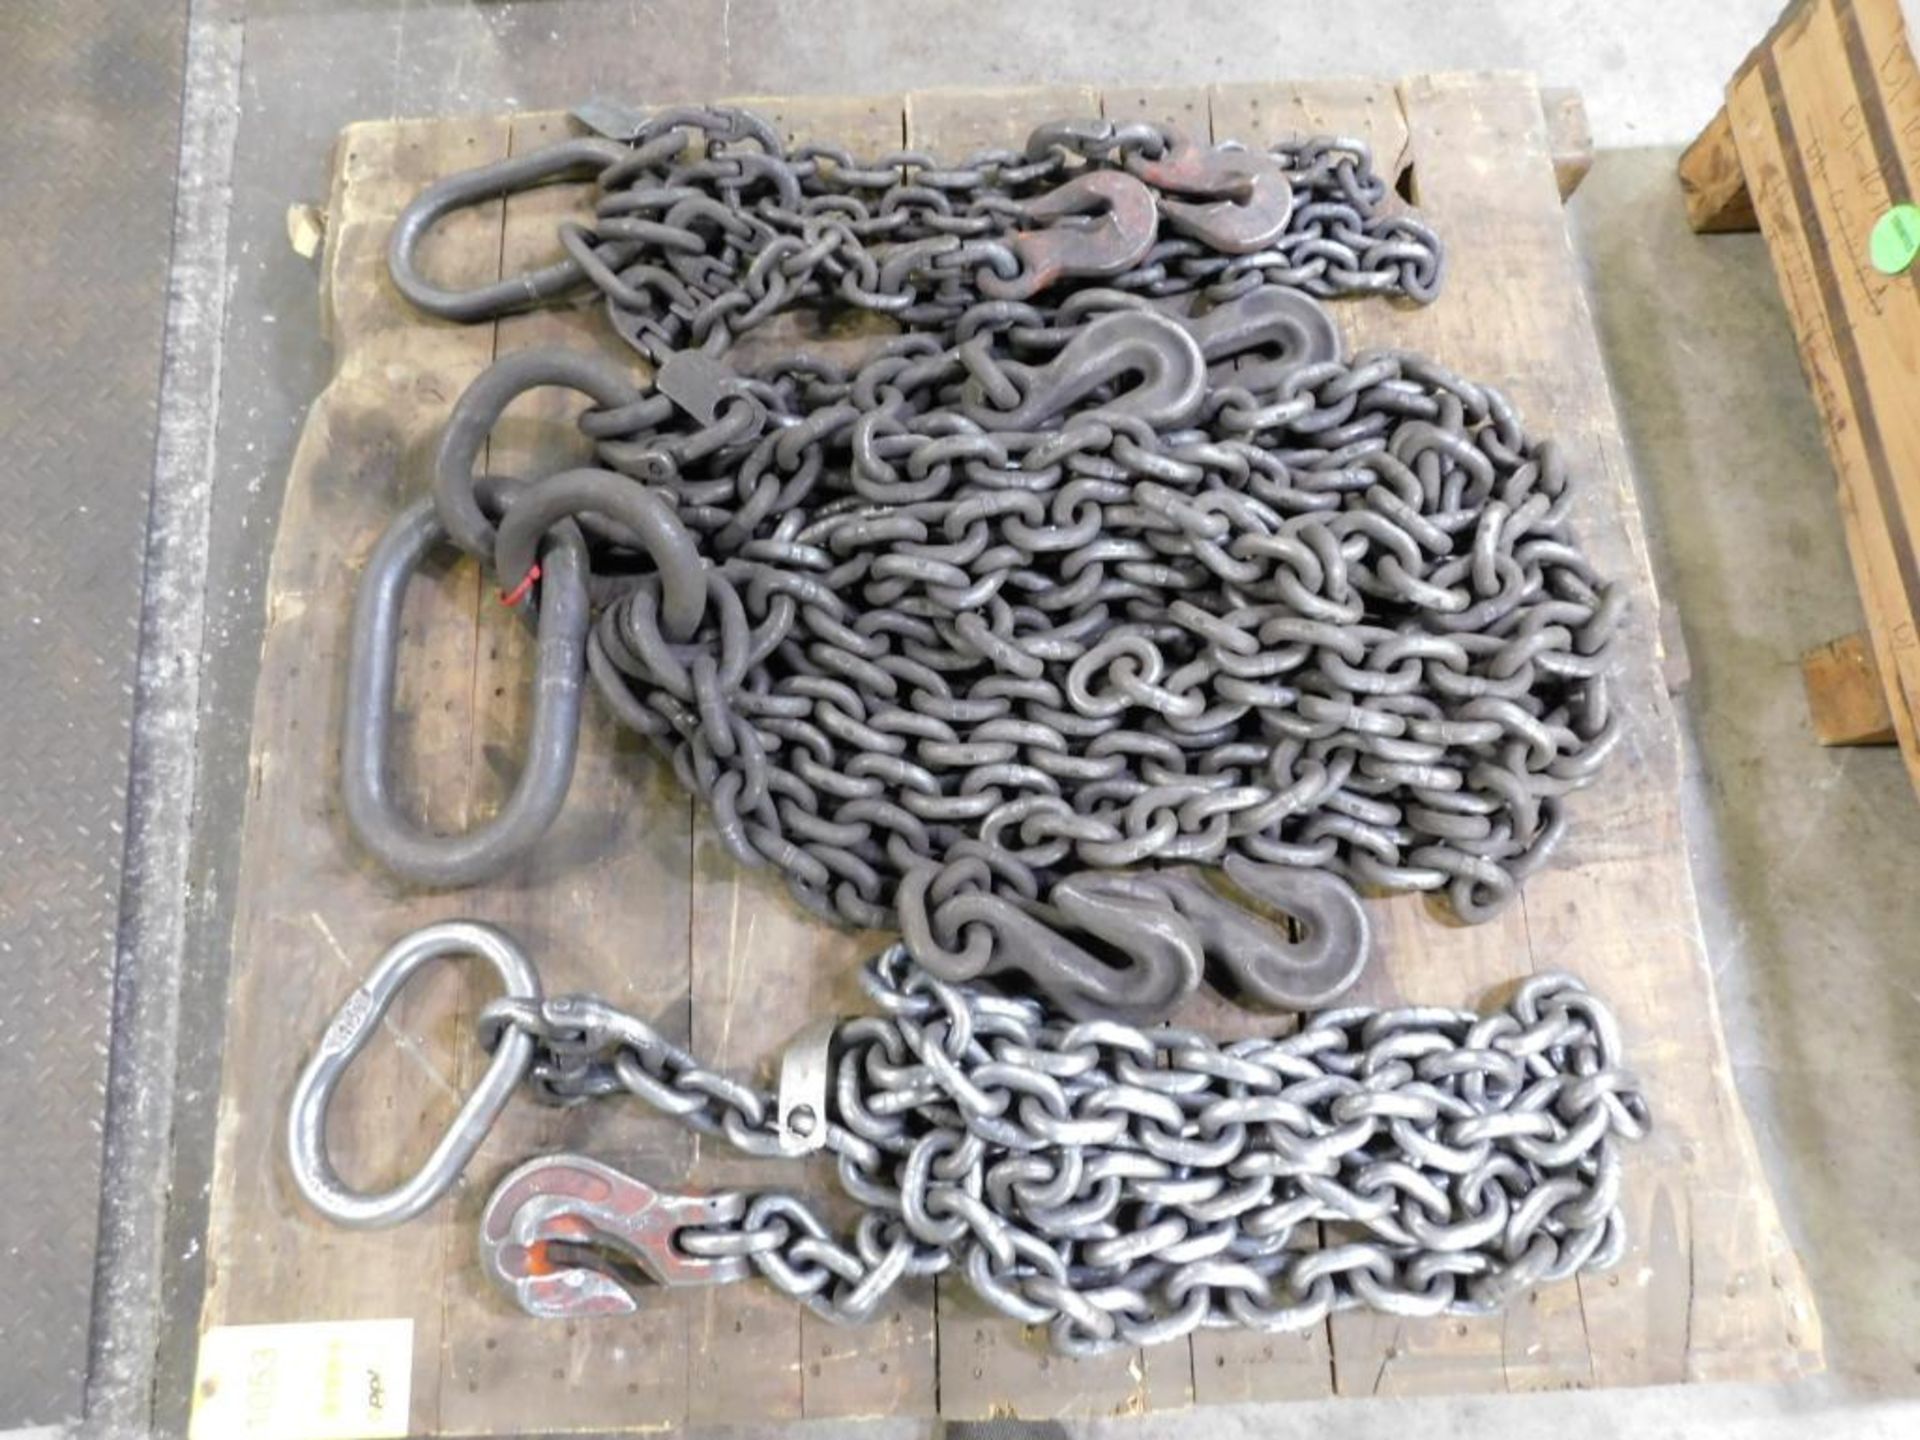 LOT: (1) 4-Leg 47,000 Lb. Chain Lifting Sling, 11' Reach, Size 5/8", (1) 1-Leg 22,600 Lb. Chain Lift